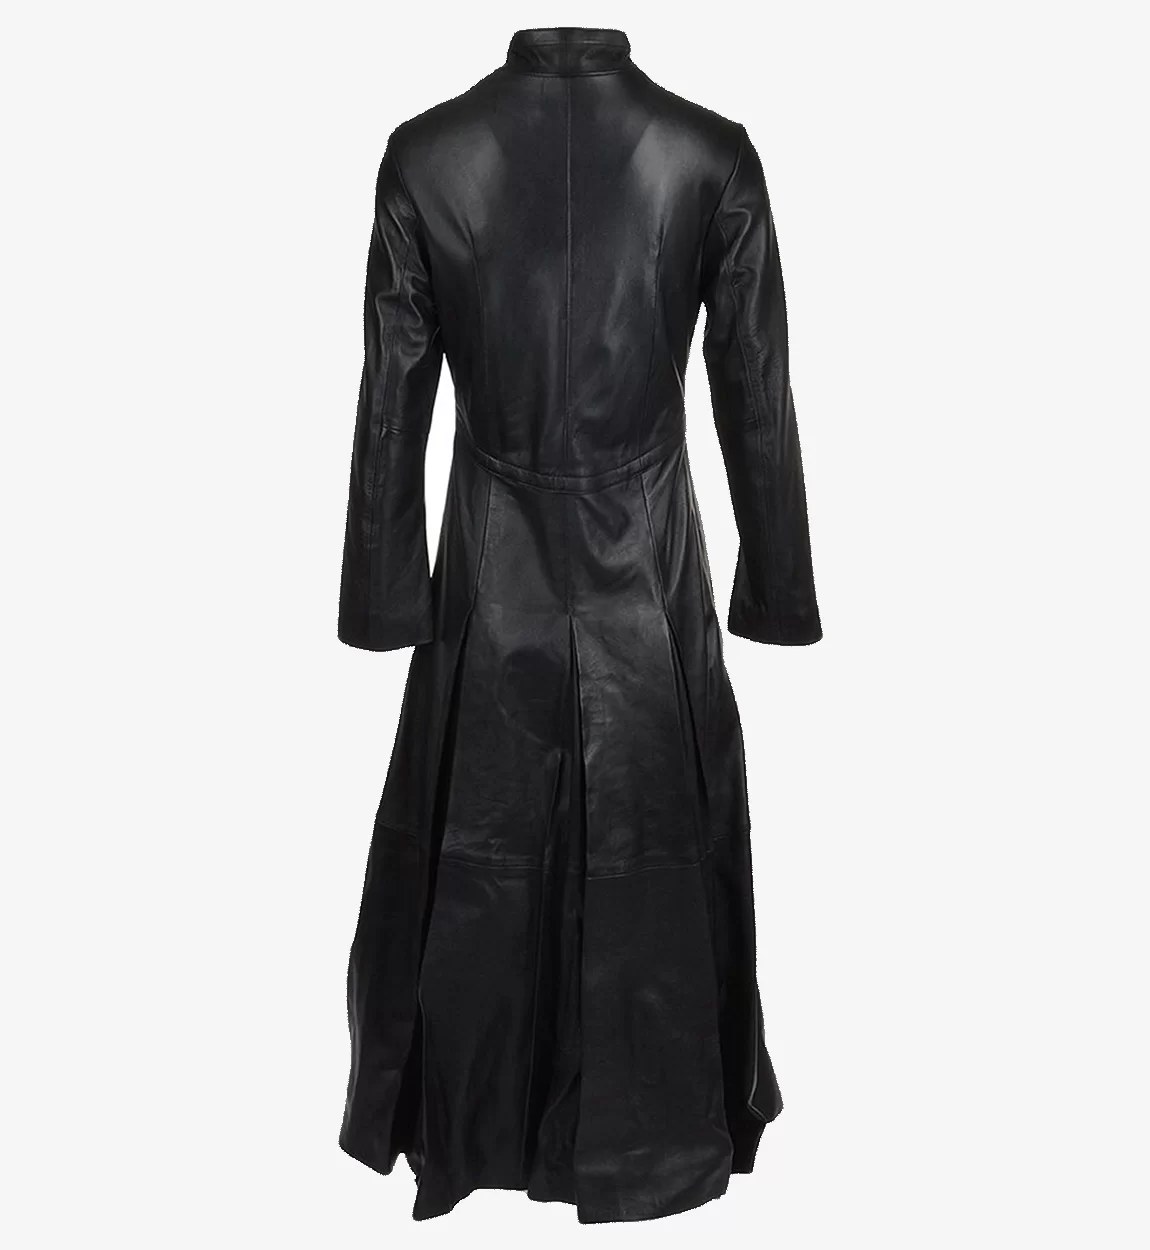 Womens-Black-Real-Sheepskin-Gothic-Style-Long-Length-Leather-Coat1.webp